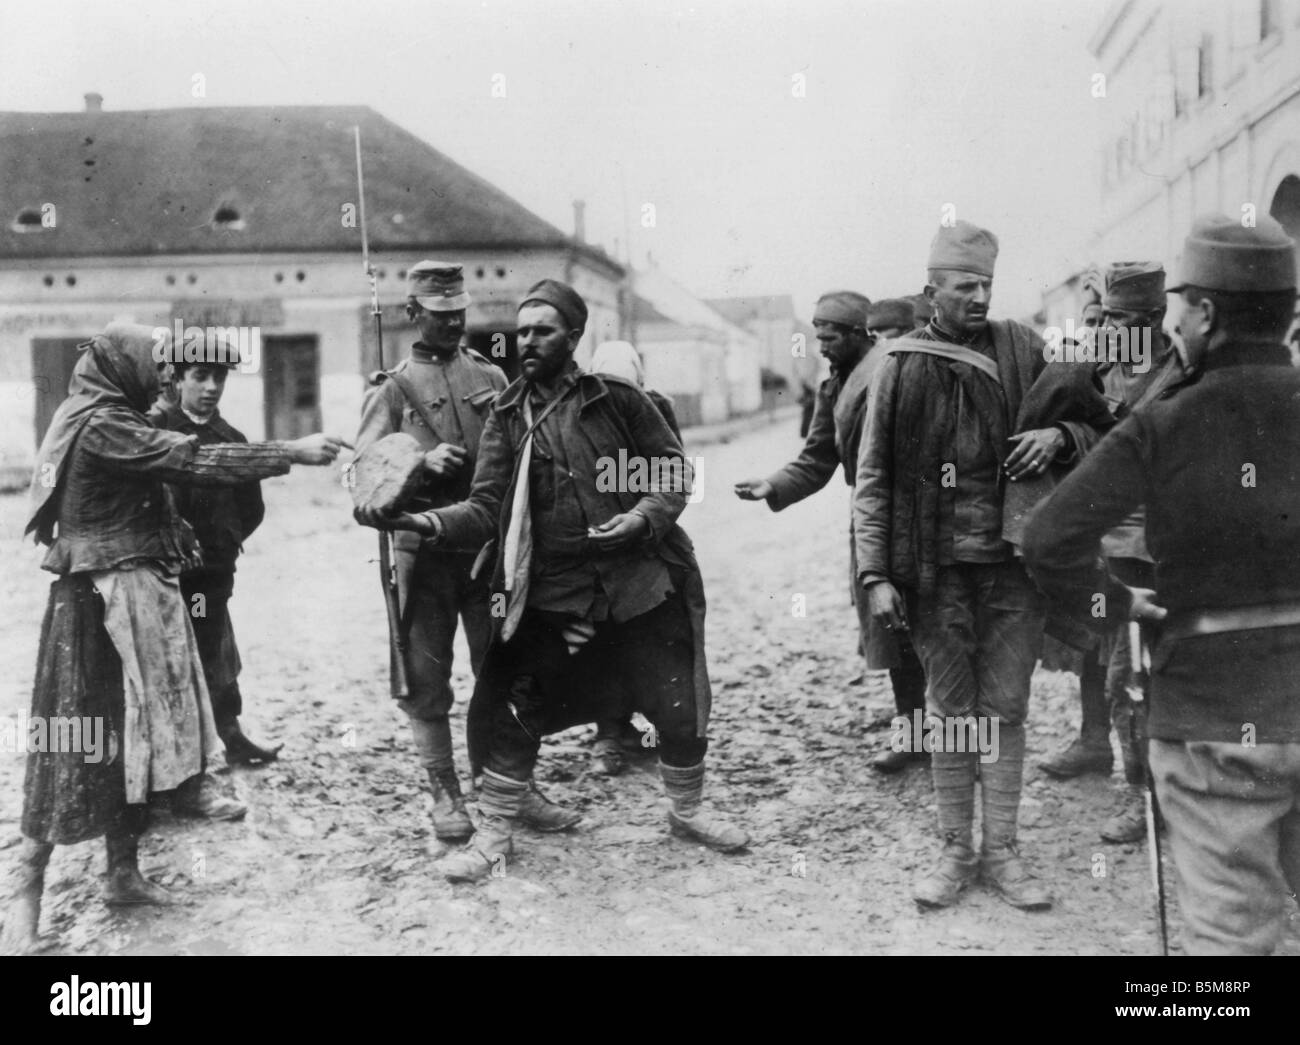 2 G55 K1 1916 19 Feeding Serbian POWs WWI 1916 History World War I Prisoners of war War in the Balkans Serbian POWs being guarde Stock Photo